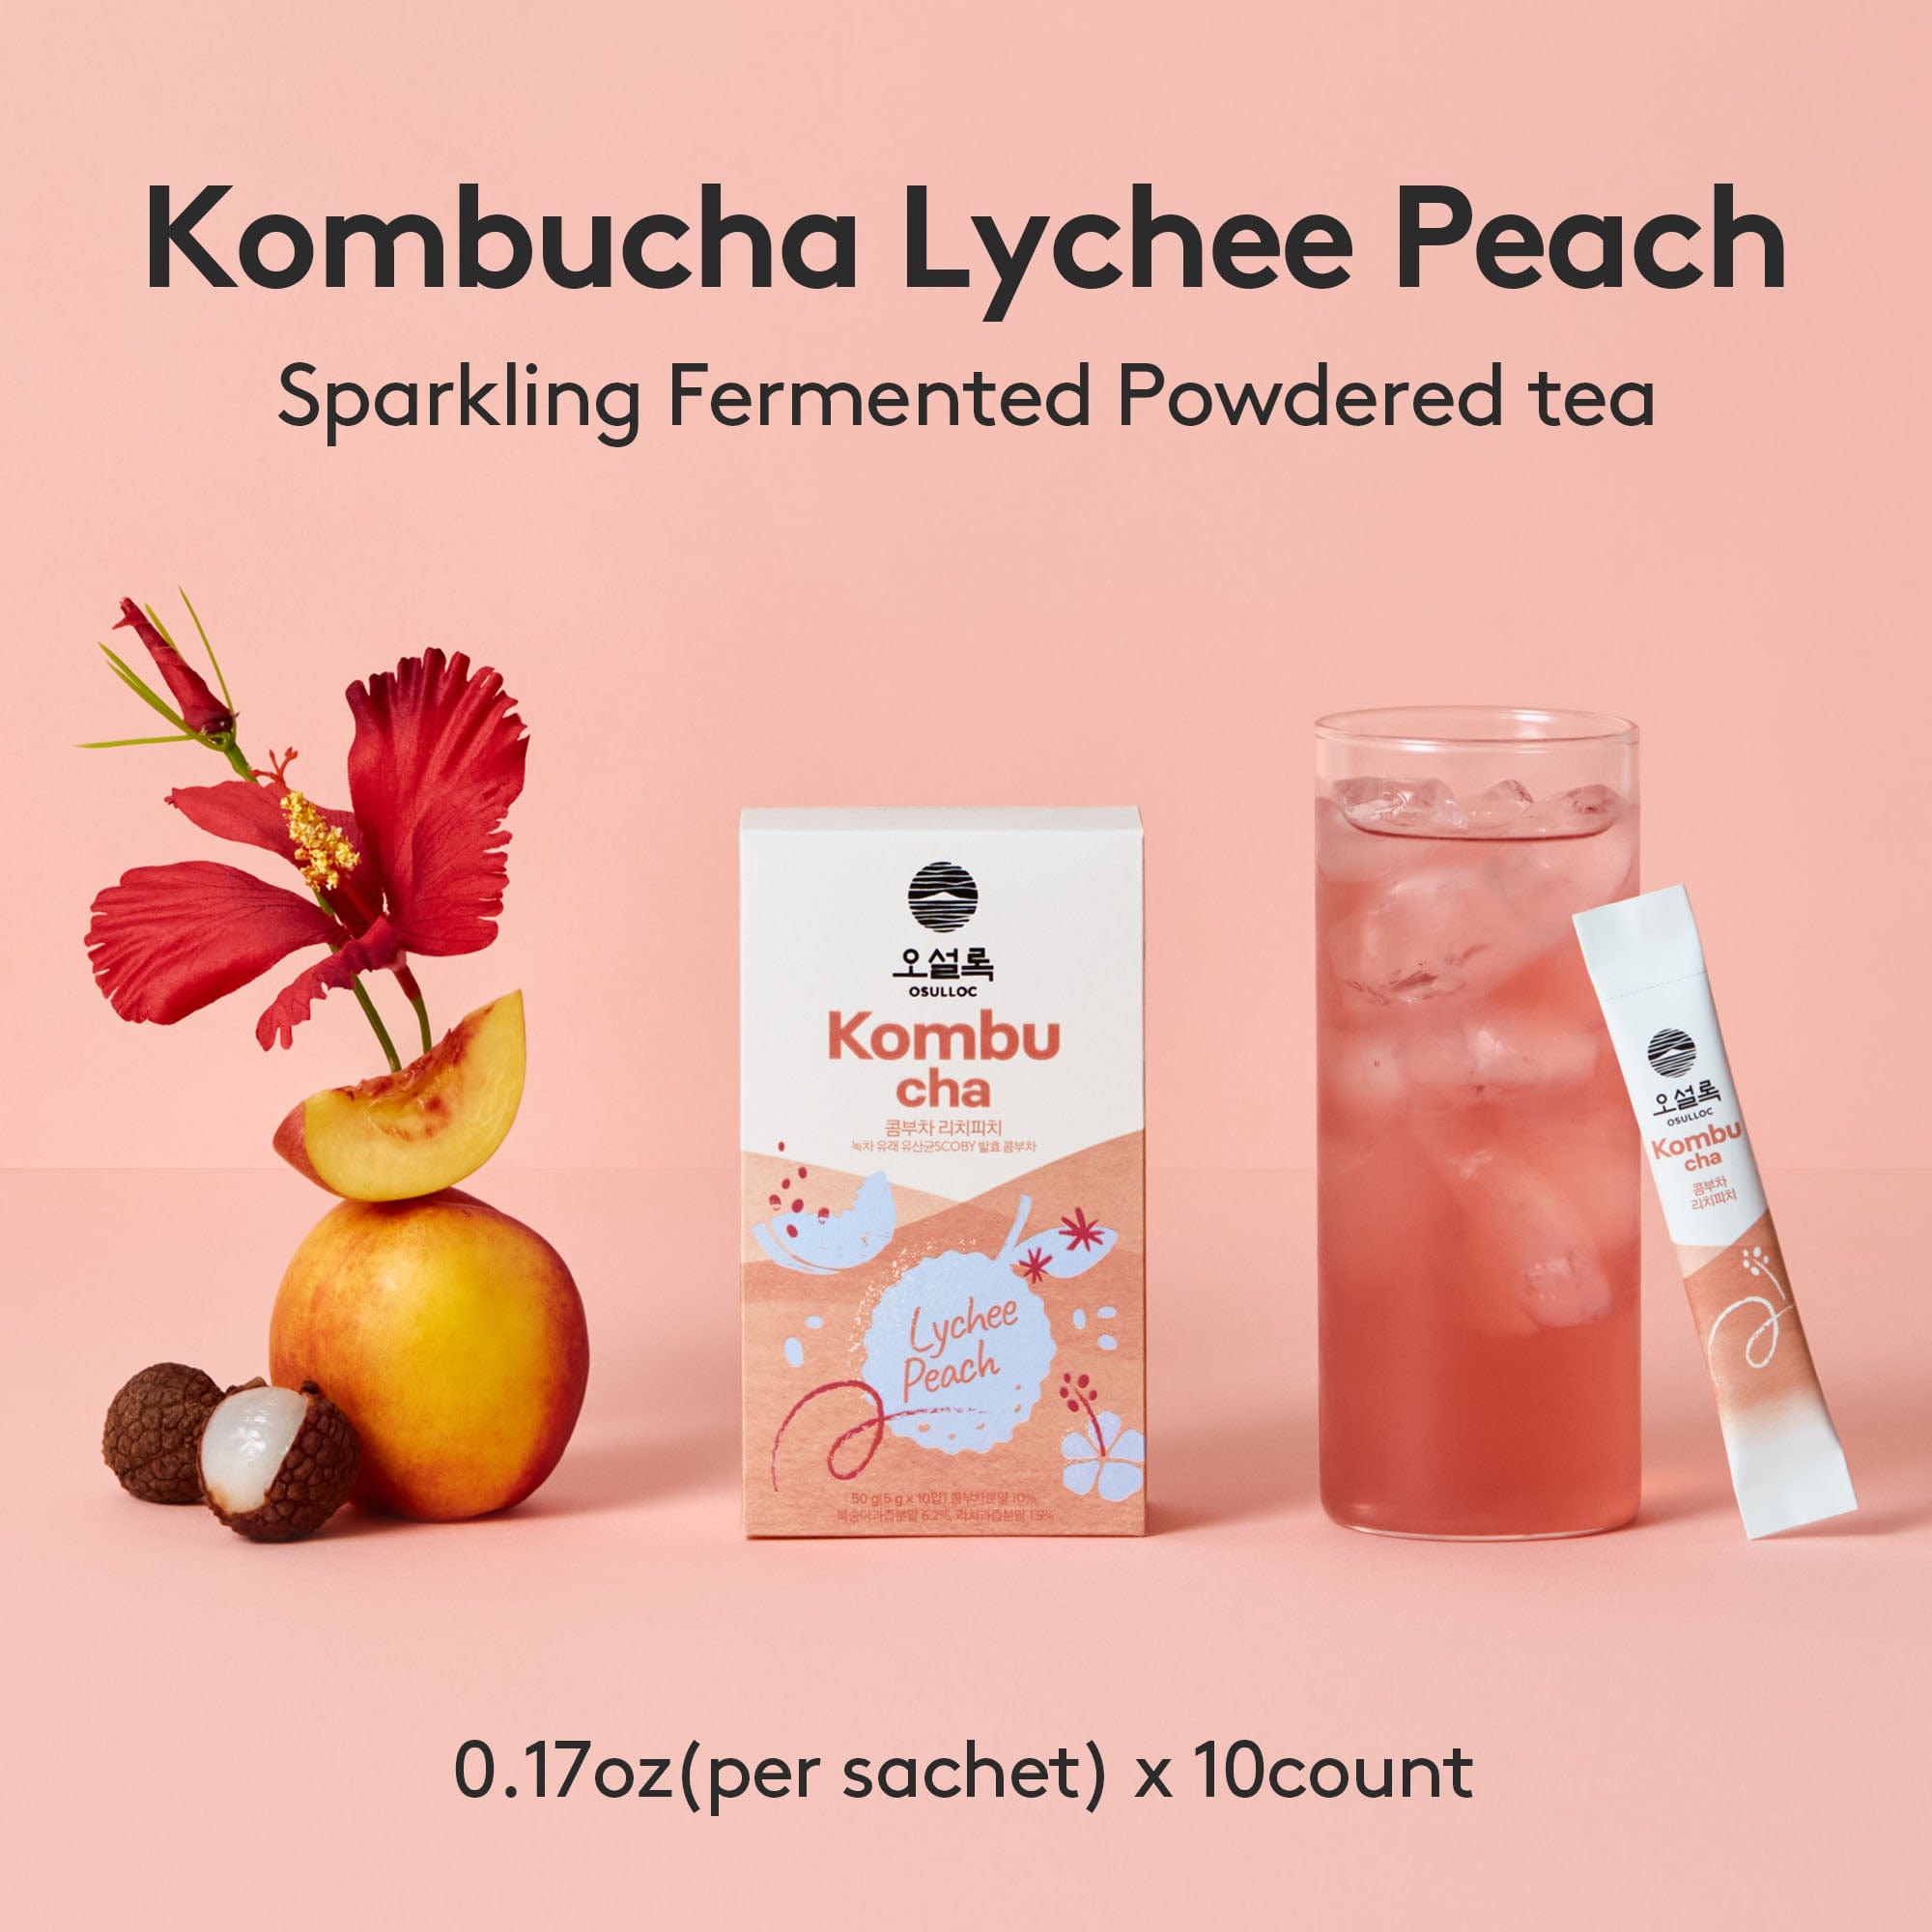 OSULLOC Kombucha Lychee Peach (10 Sticks, 1.76oz)